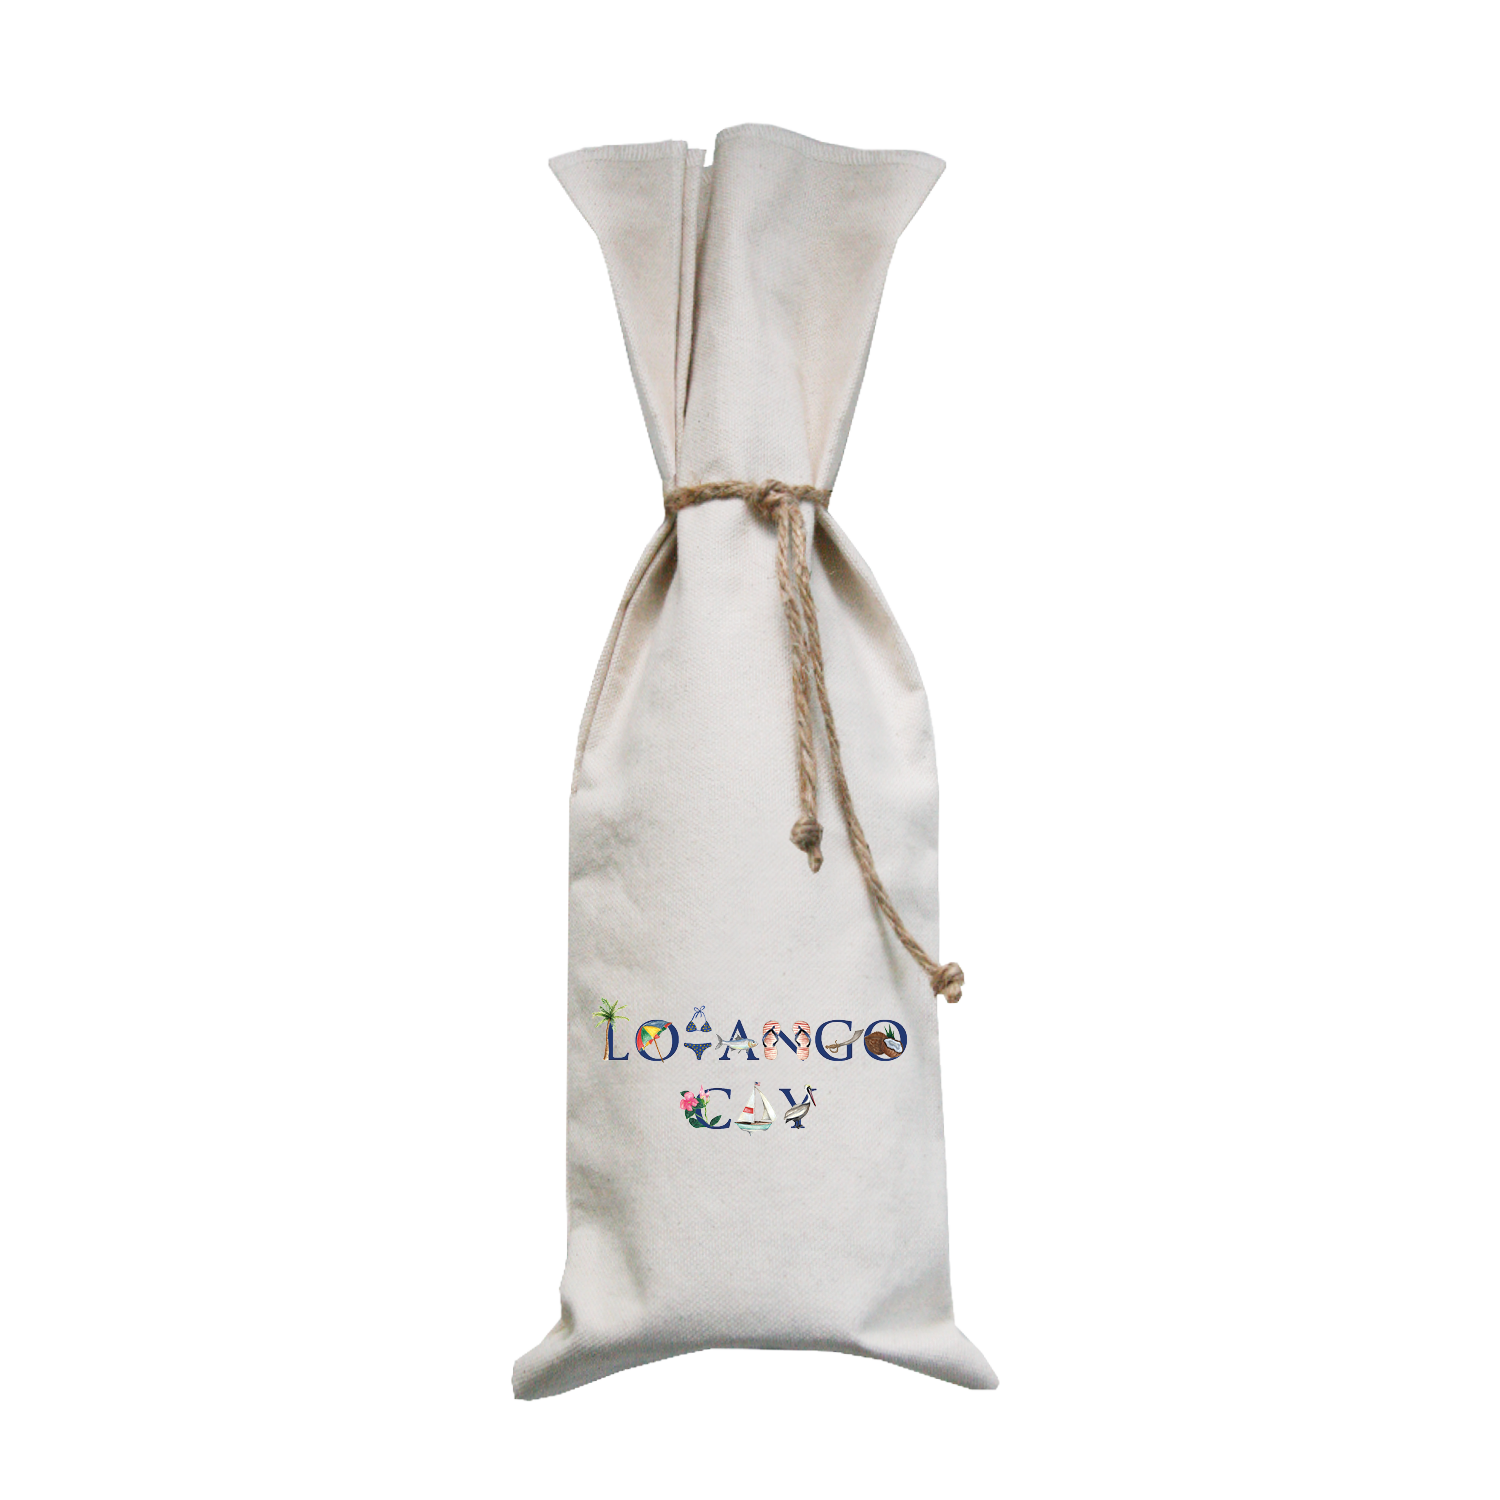 lovango cay wine bag